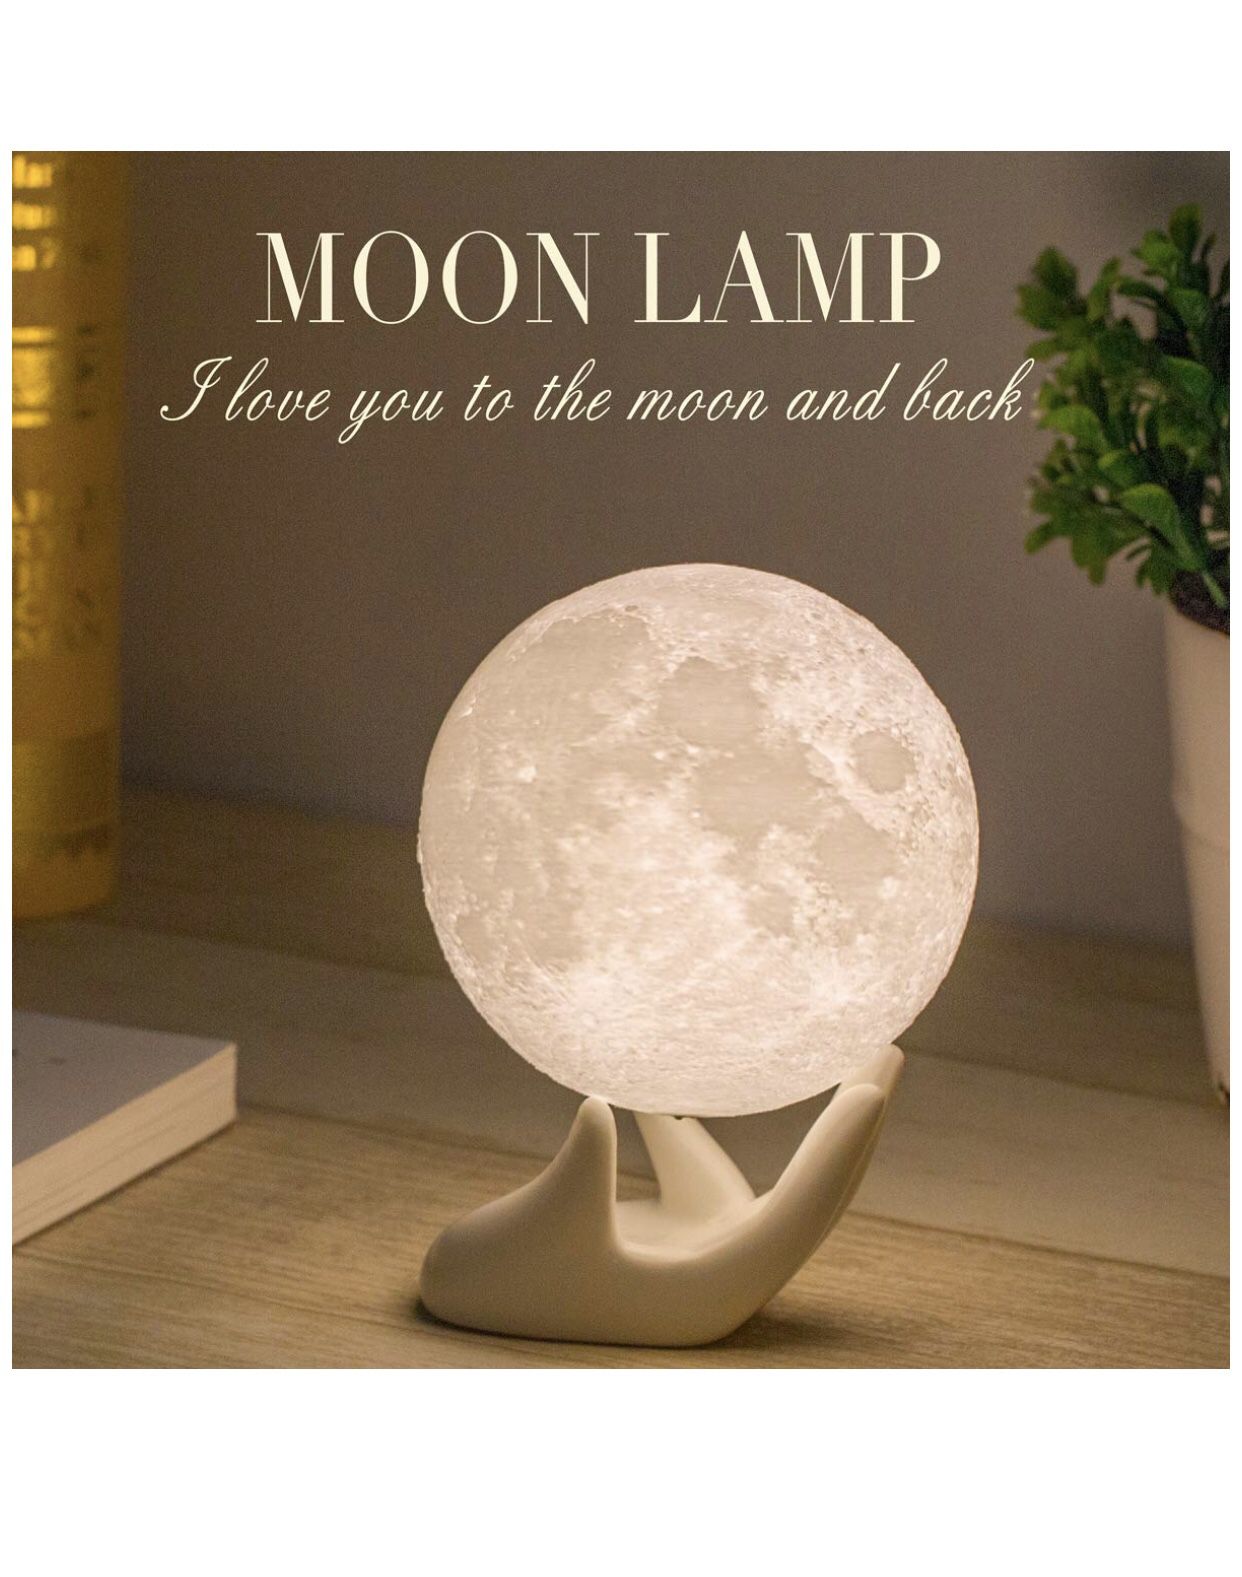 Brand new moon lamp